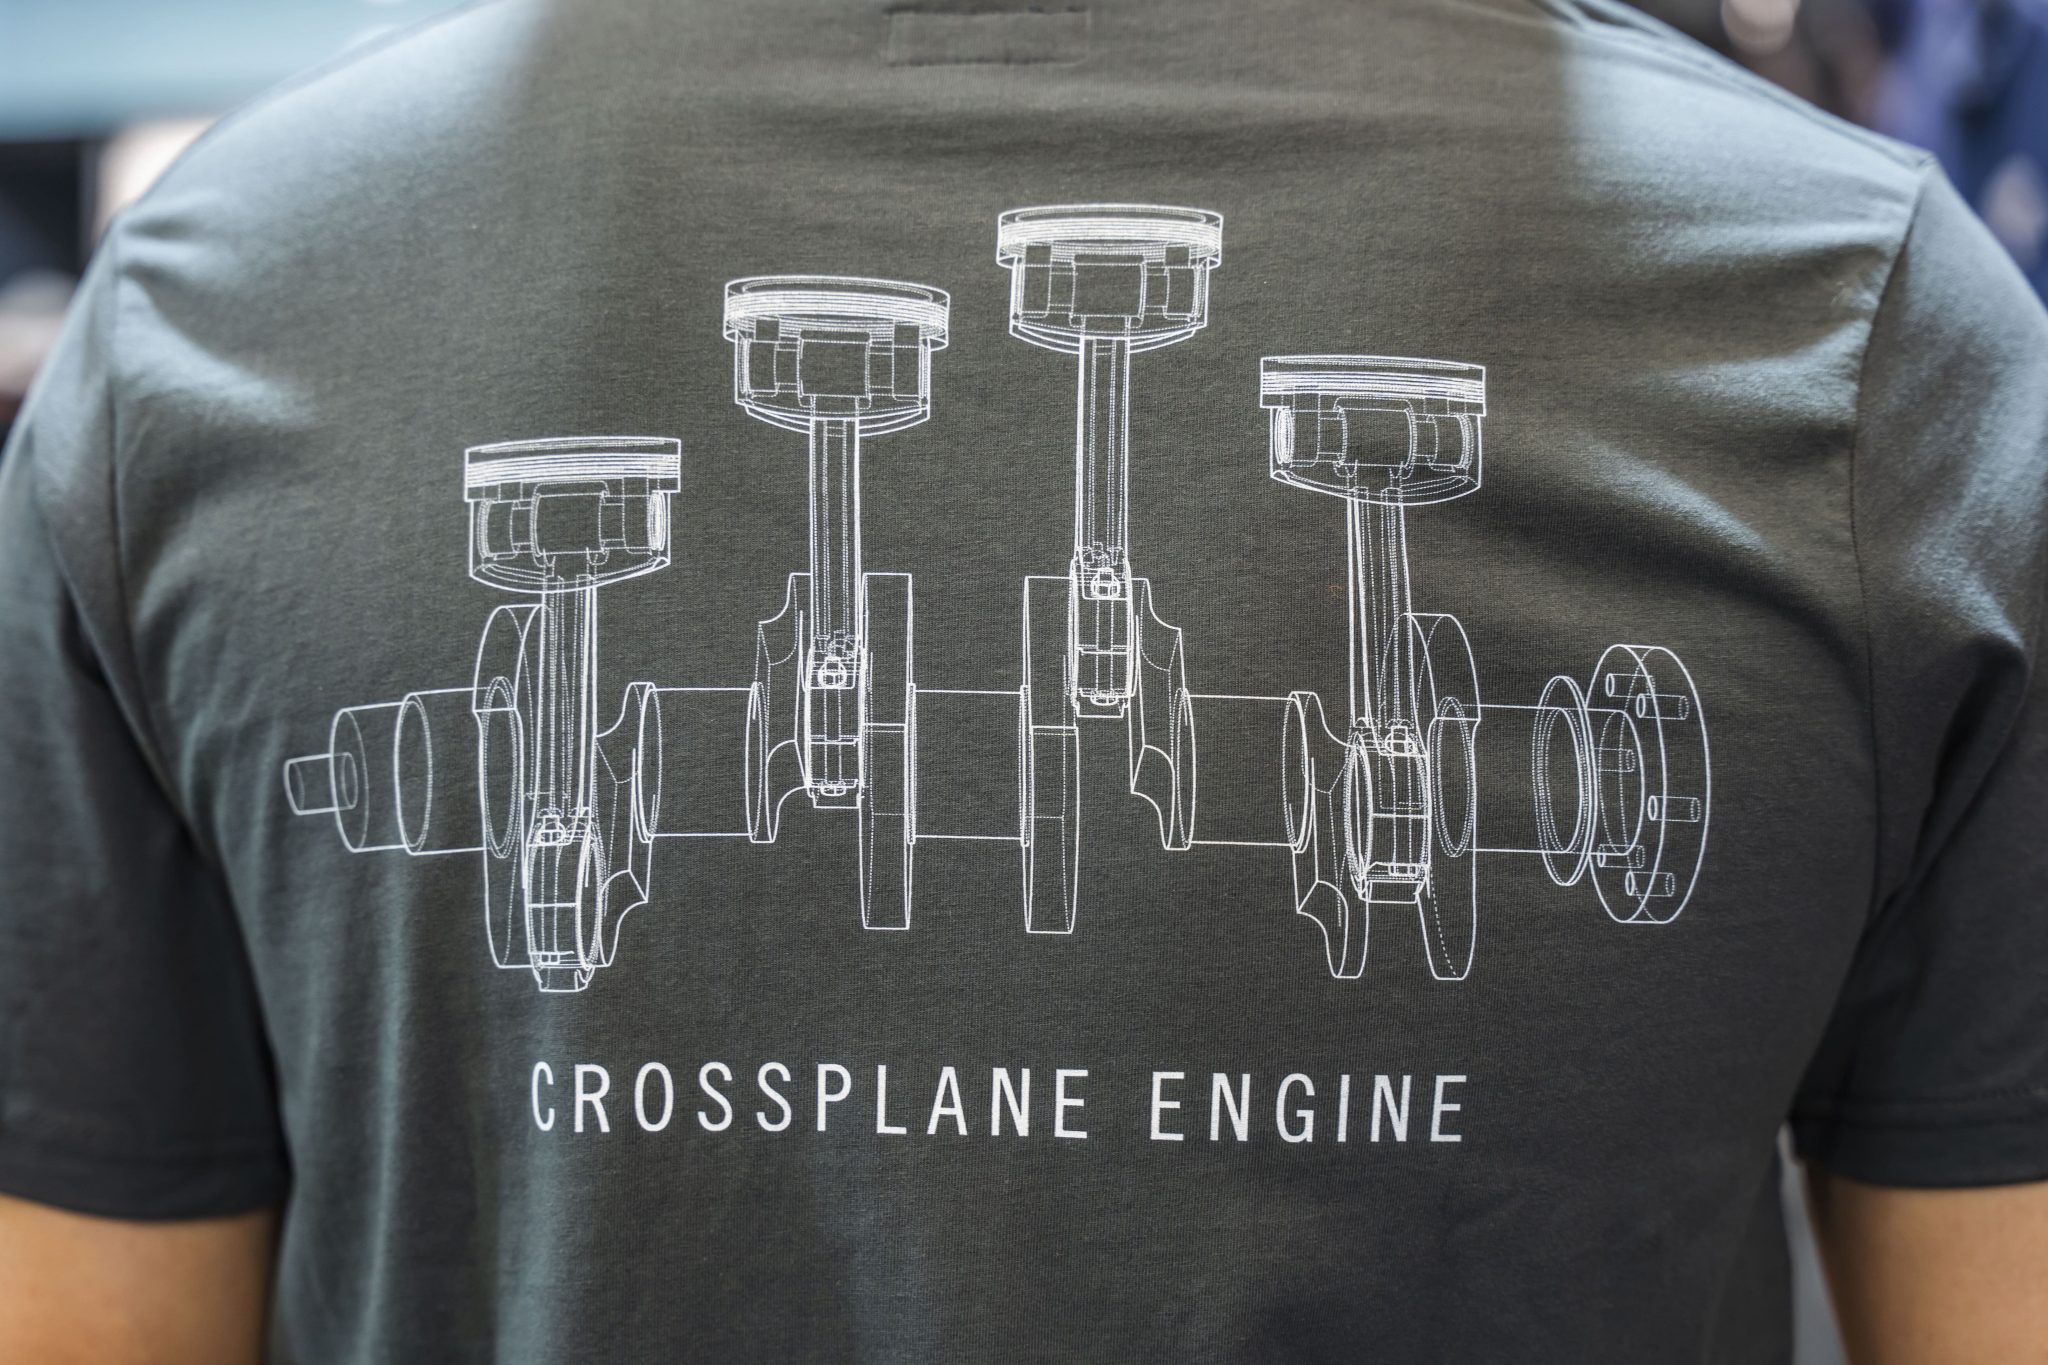 Áo thun cổ tròn Crossplane Engine (mặt sau)